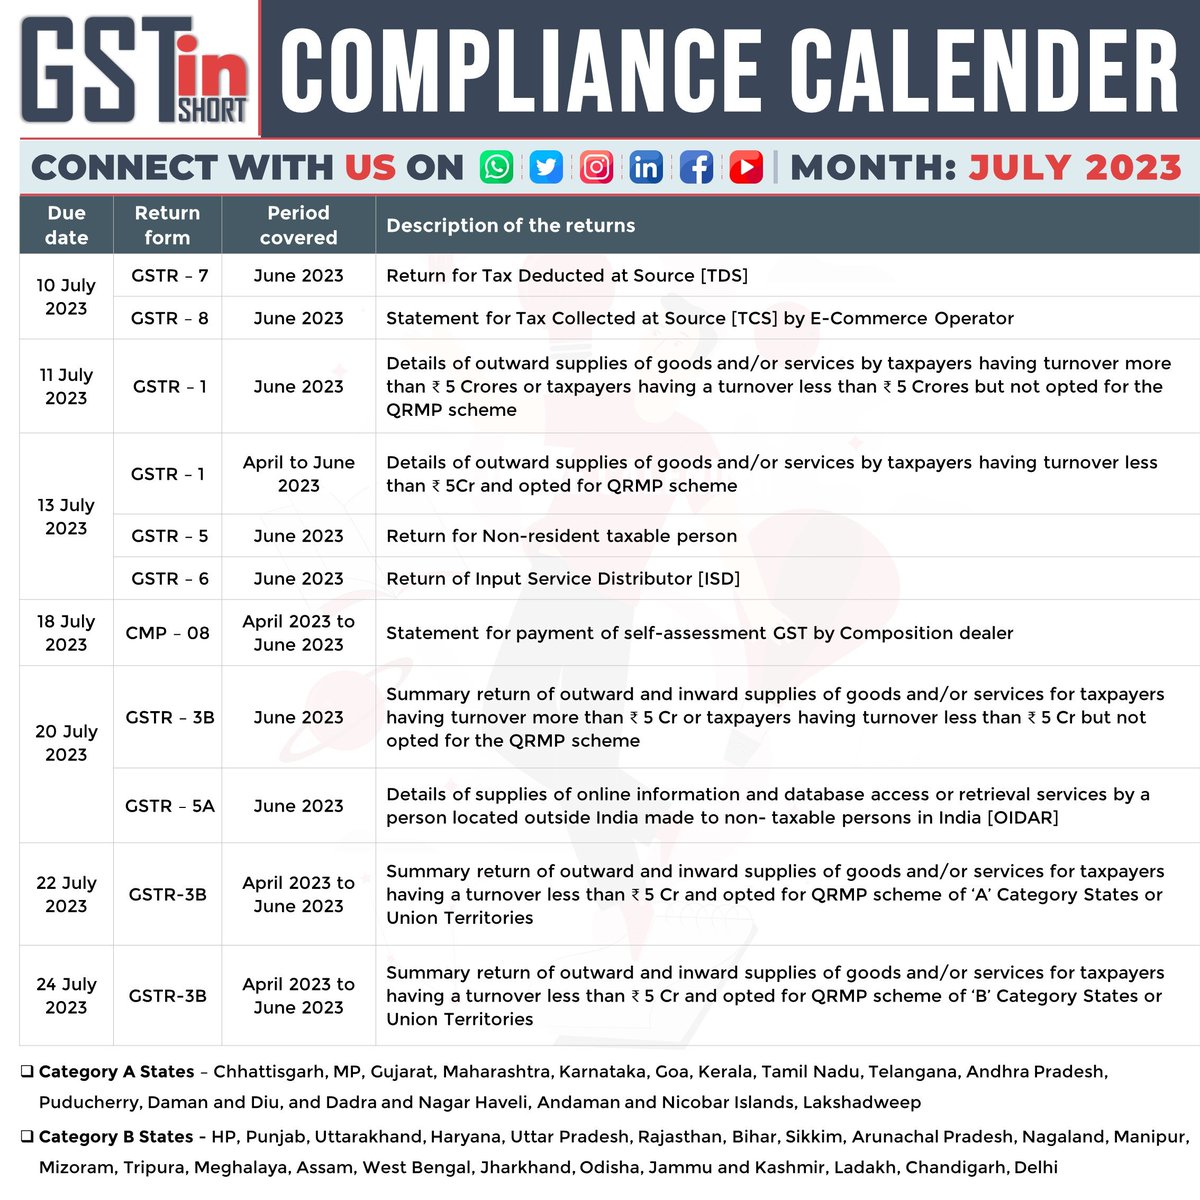 𝗖𝗼𝗺𝗽𝗹𝗶𝗮𝗻𝗰𝗲 𝗖𝗮𝗹𝗲𝗻𝗱𝗮𝗿 for the month of 𝗝𝘂ly 𝟮𝟬𝟮𝟯.

#GSTCompliance #GSTCalendar #TaxDeadlines #GSTReturns #GSTFiling #DueDates #GSTComplianceCalendar #IndianTaxSystem #GSTIndia #GSTUpdates